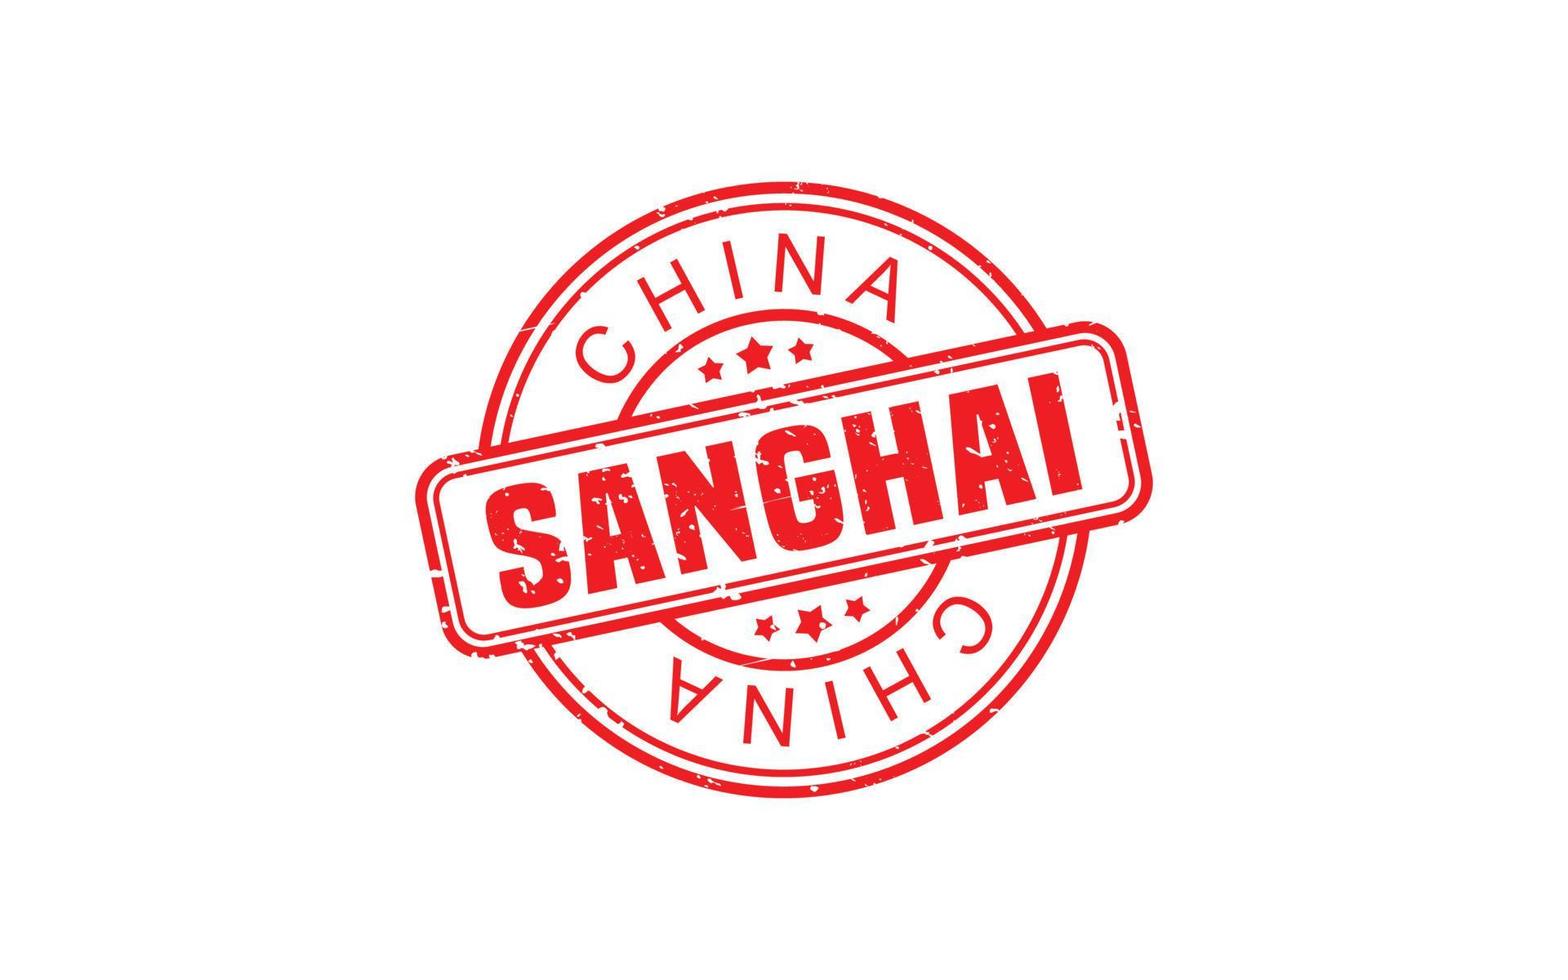 sanghai China postzegel rubber met grunge stijl Aan wit achtergrond vector